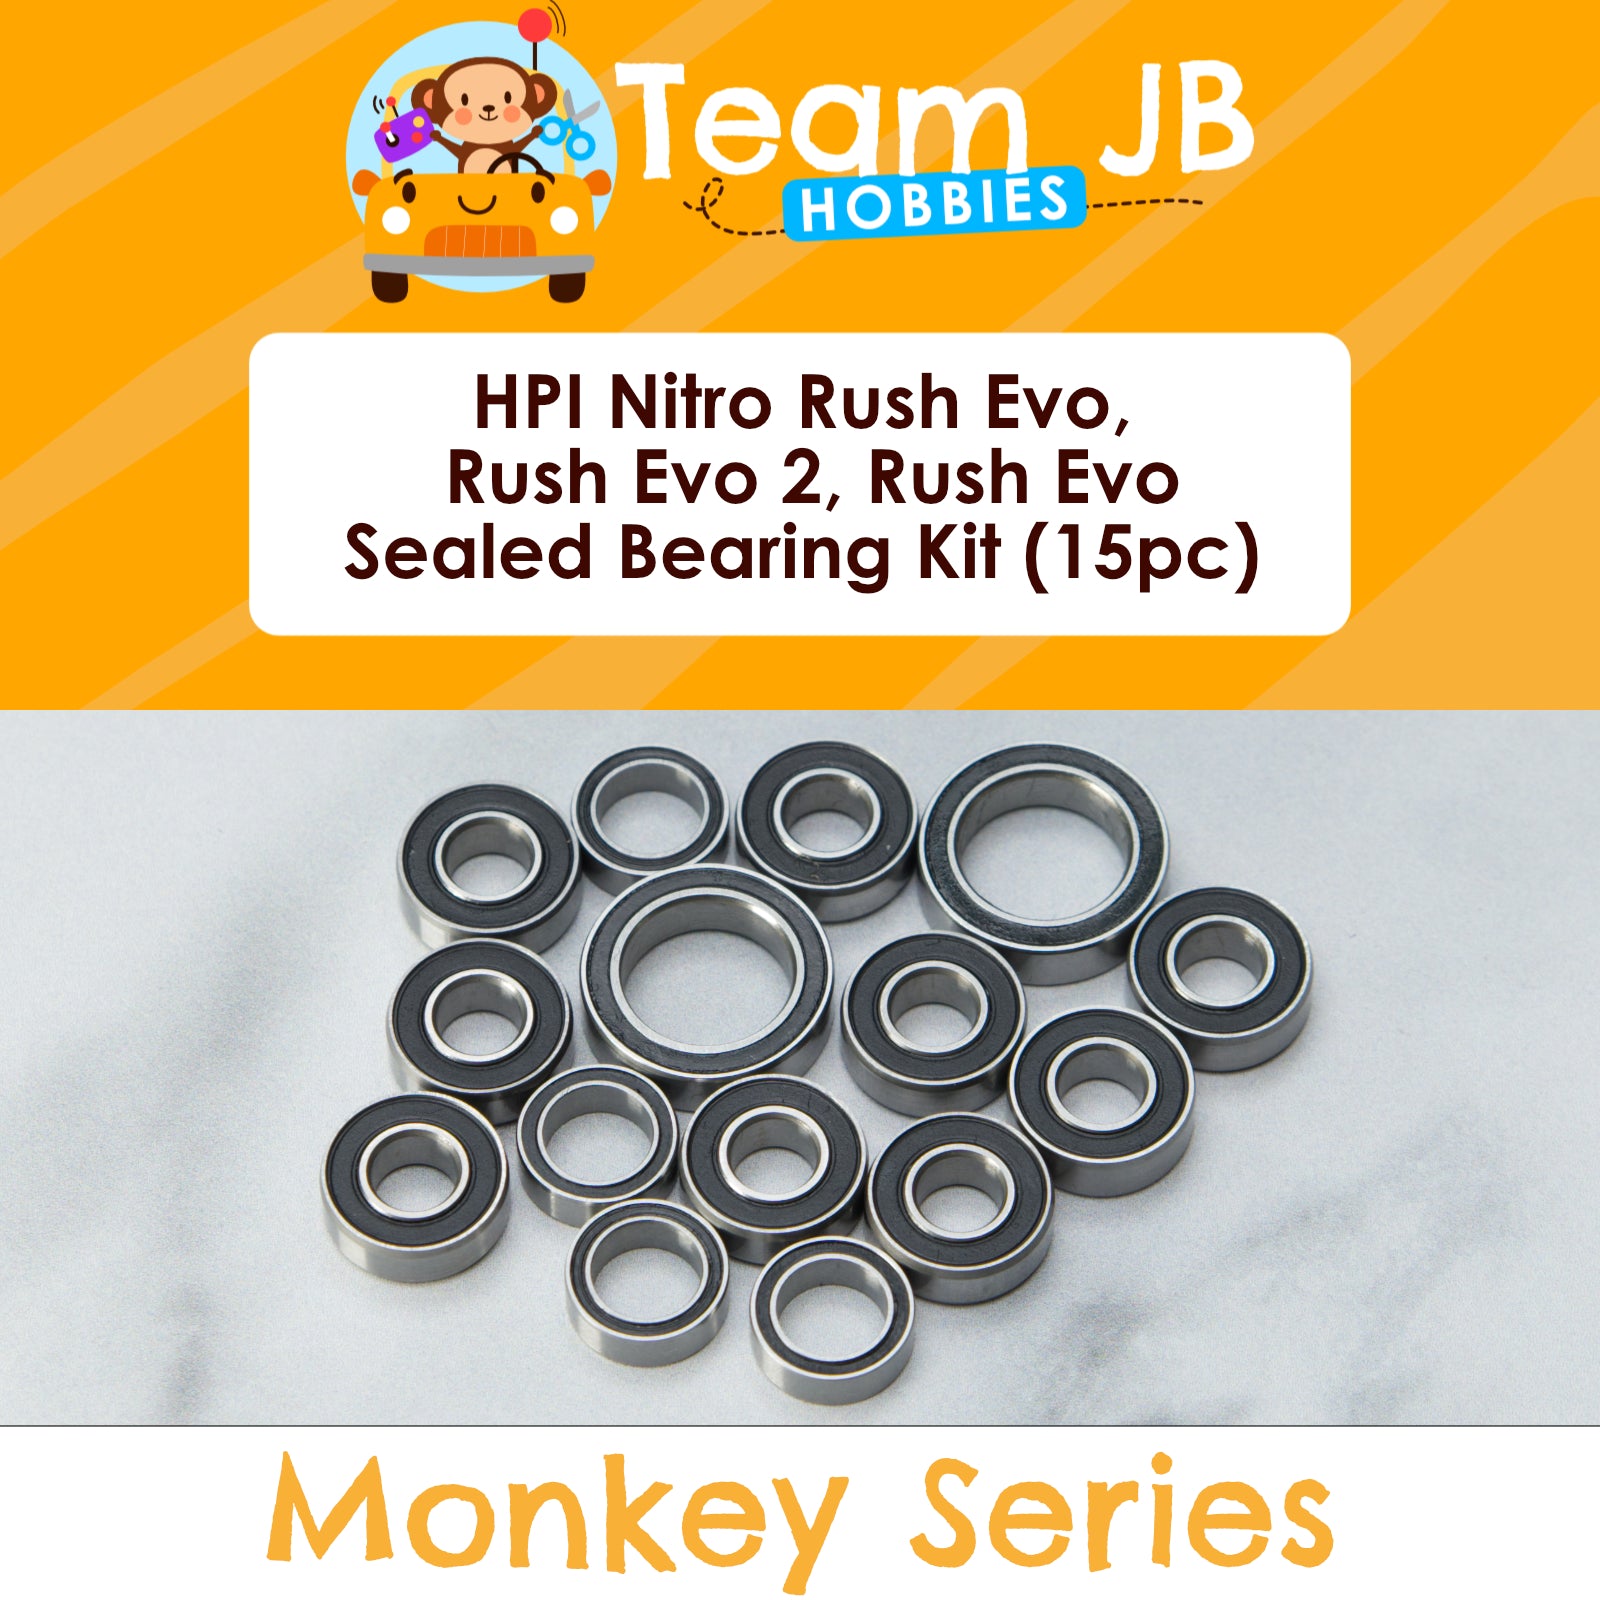 HPI Nitro Rush Evo, Rush Evo 2, Rush Evo - Sealed Bearing Kit